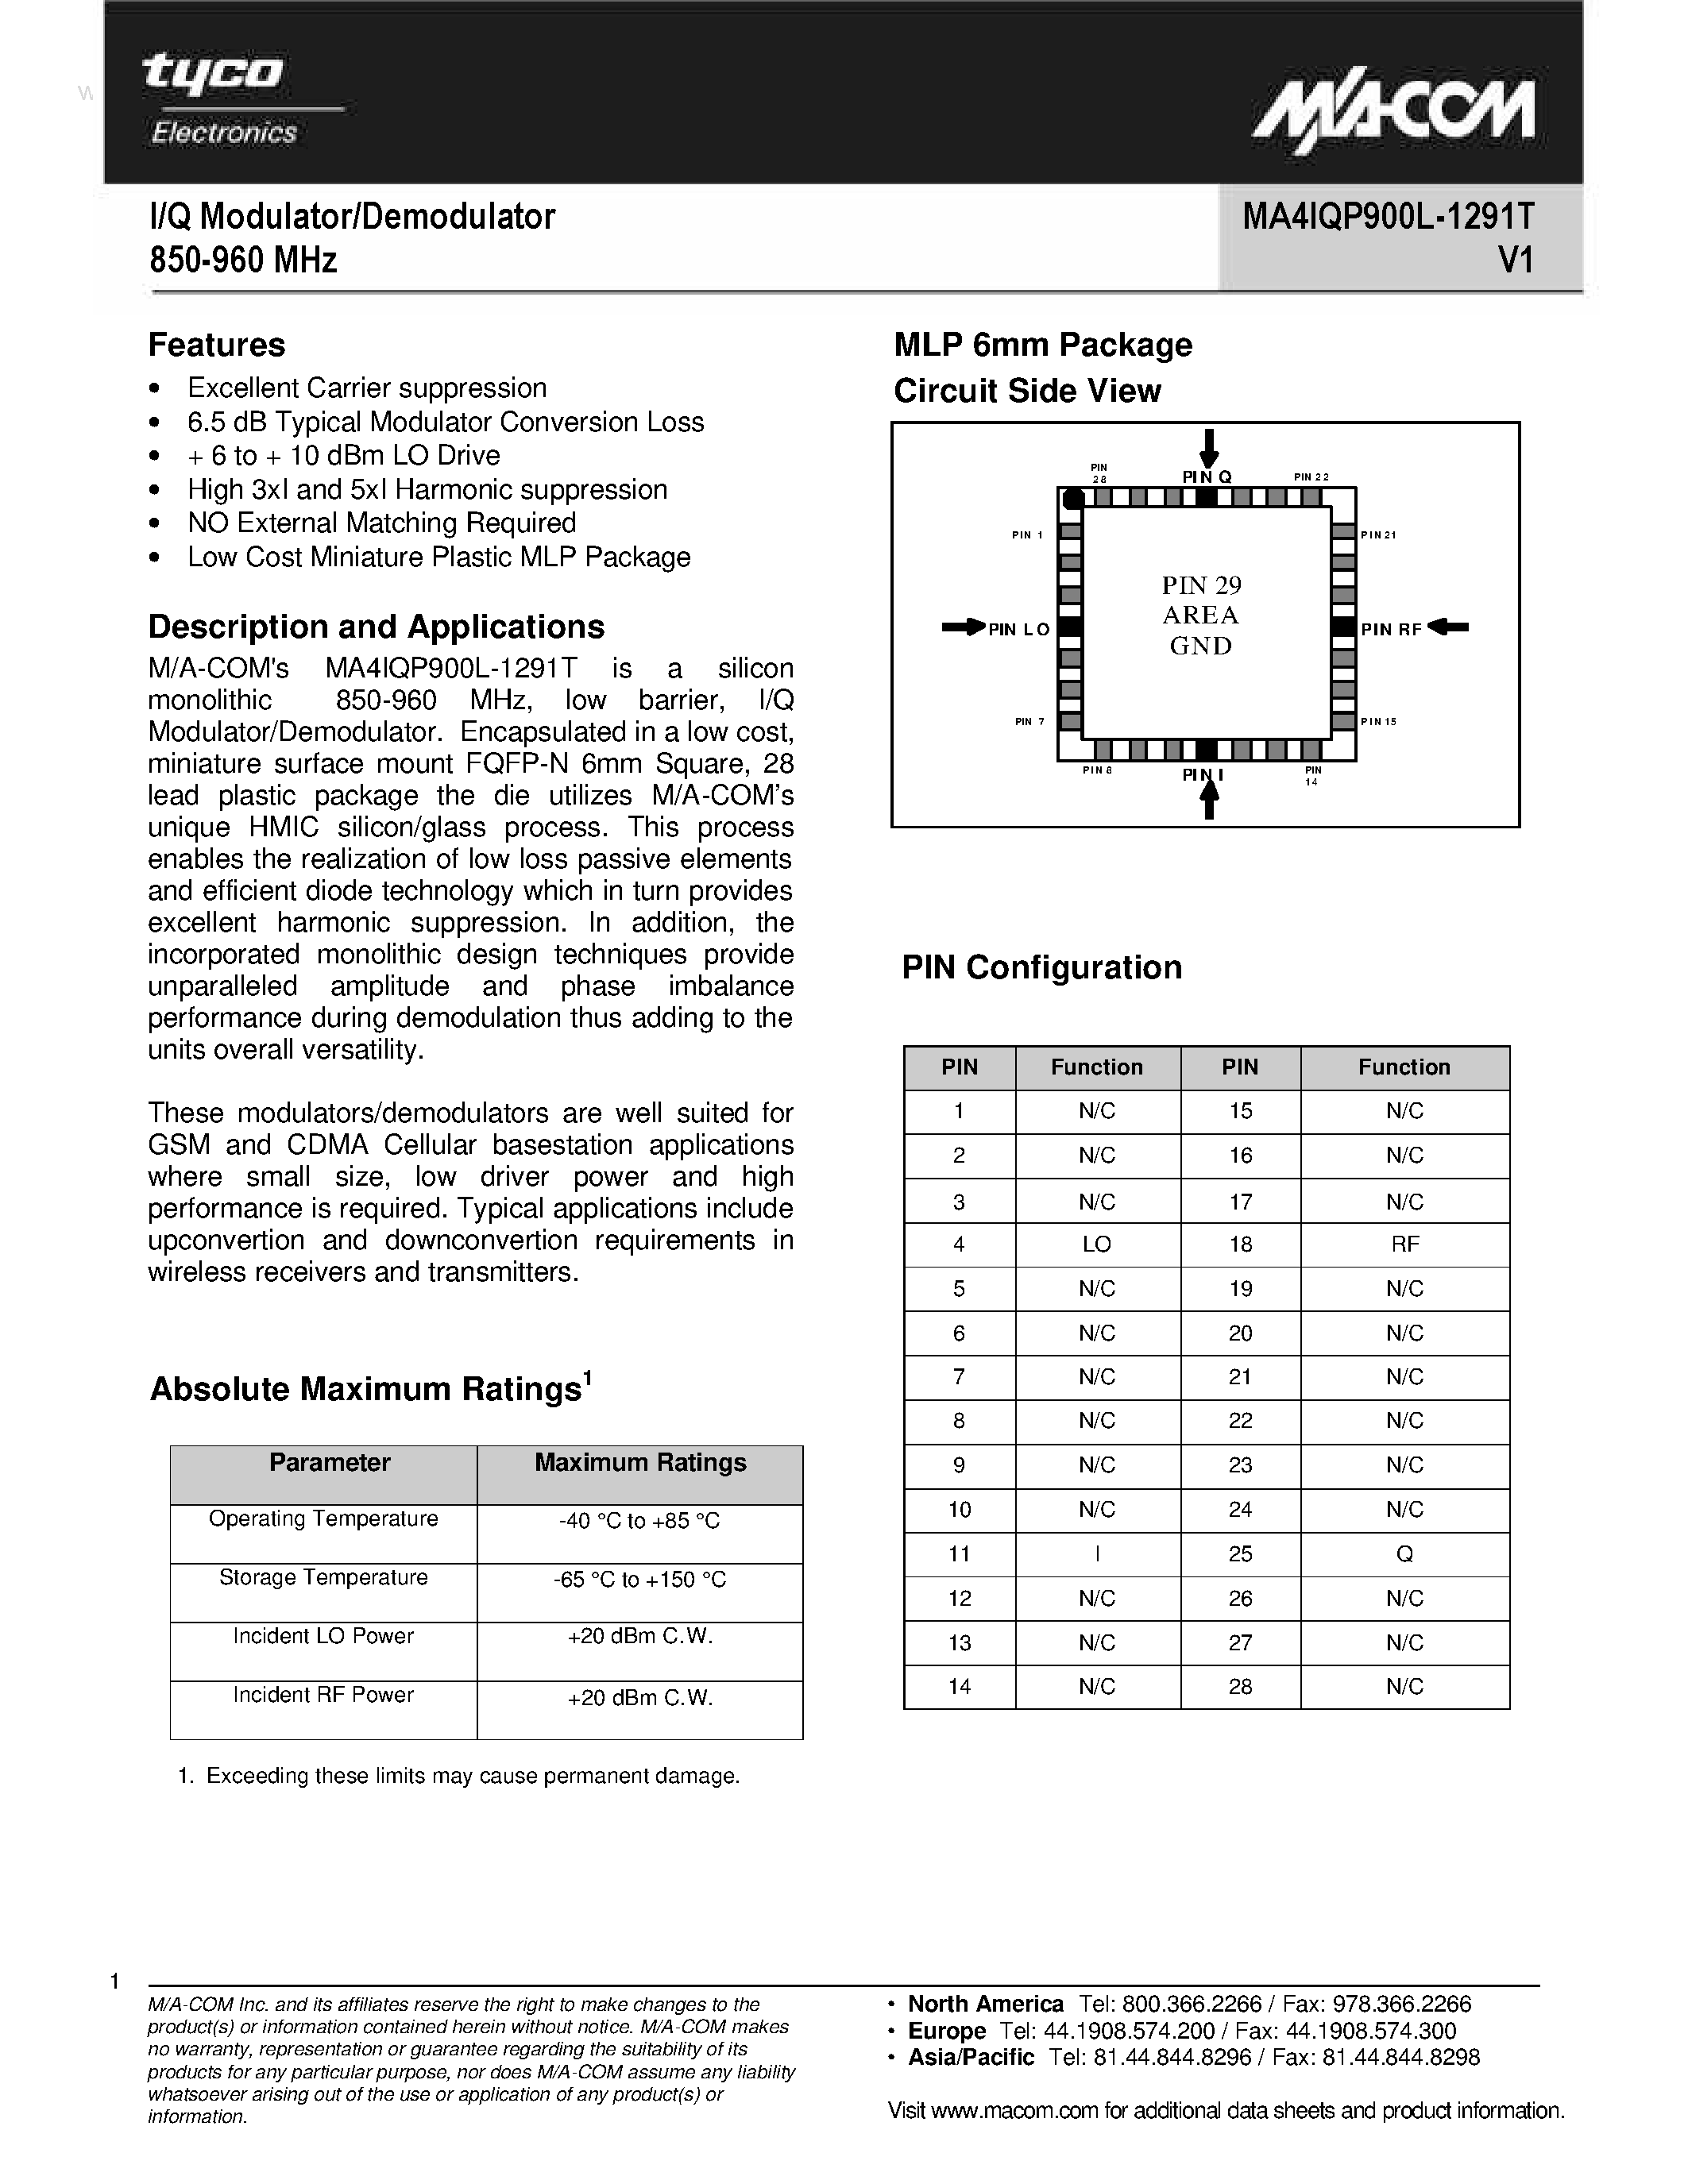 Datasheet MA4IQP900L-1291T - I/Q Modulator/Demodulator page 1